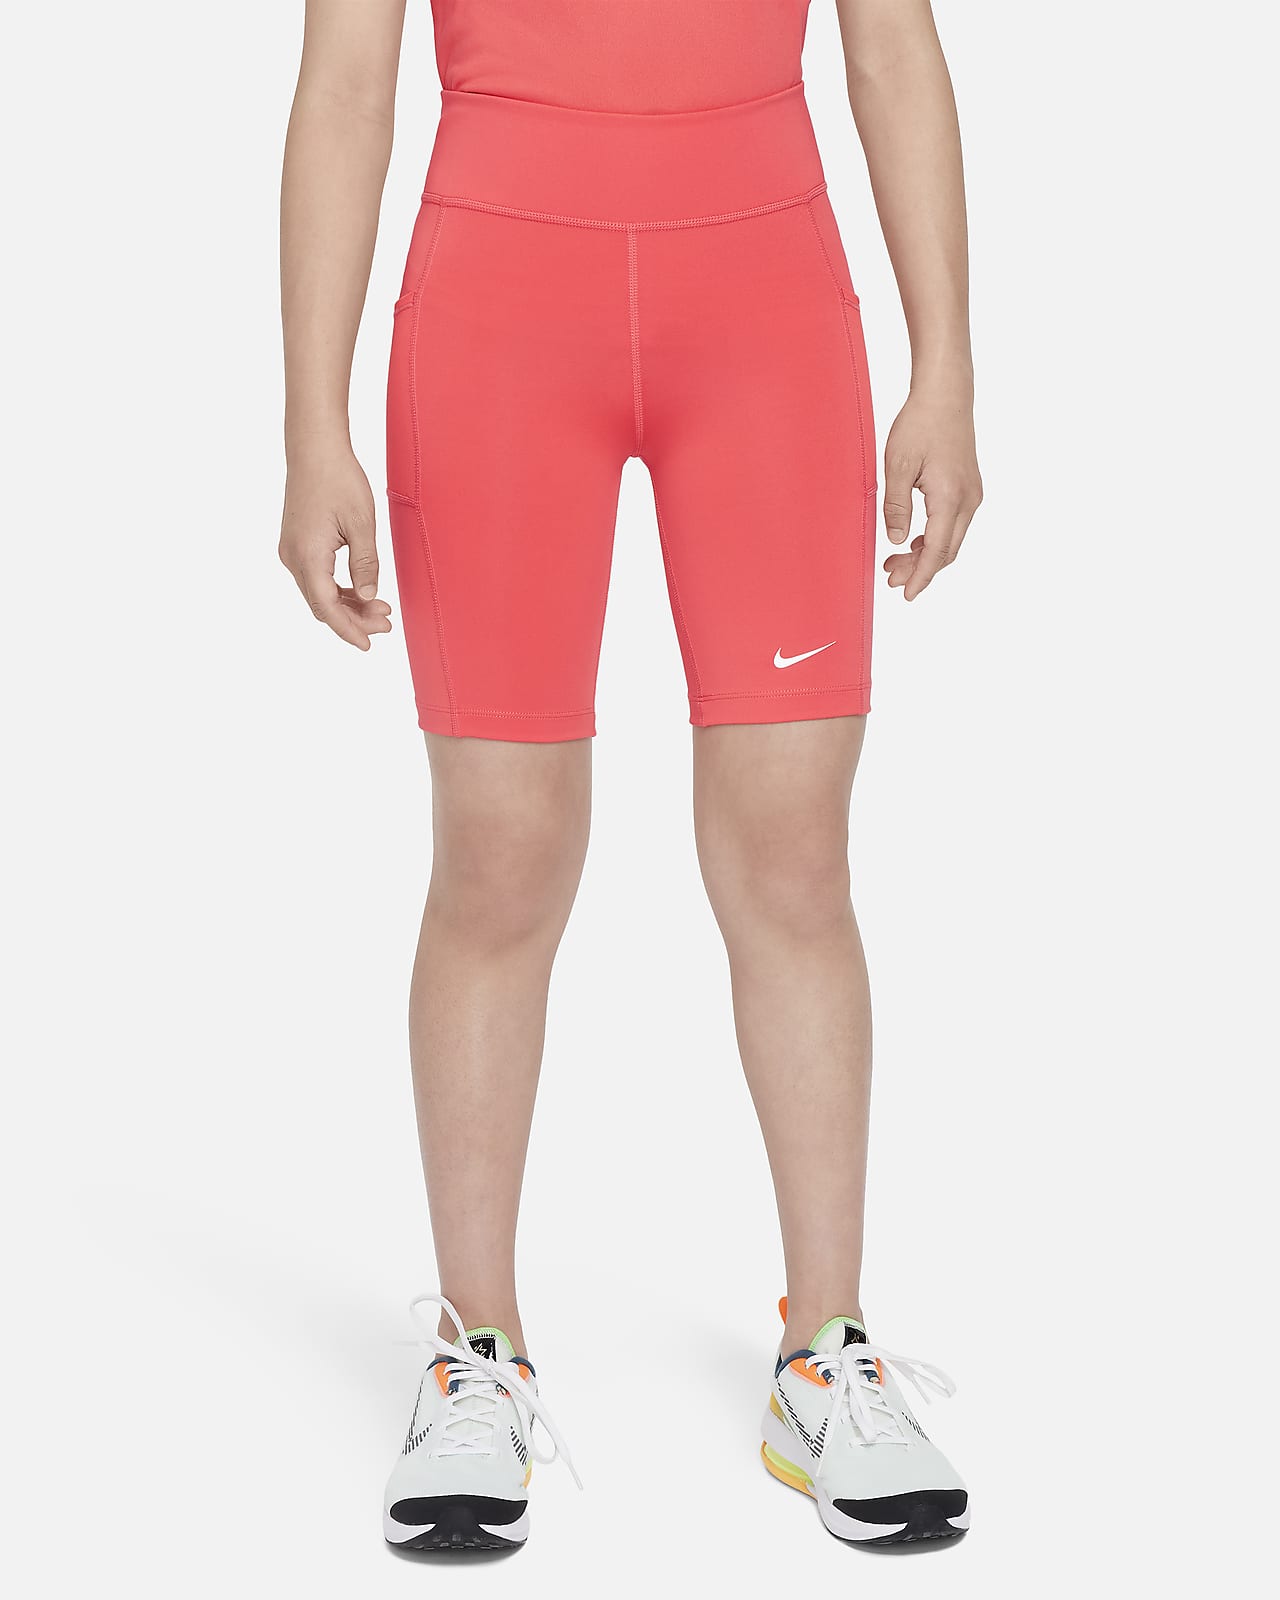  Nike Girls Little Kids' Bike Shorts Pink (as1, Numeric